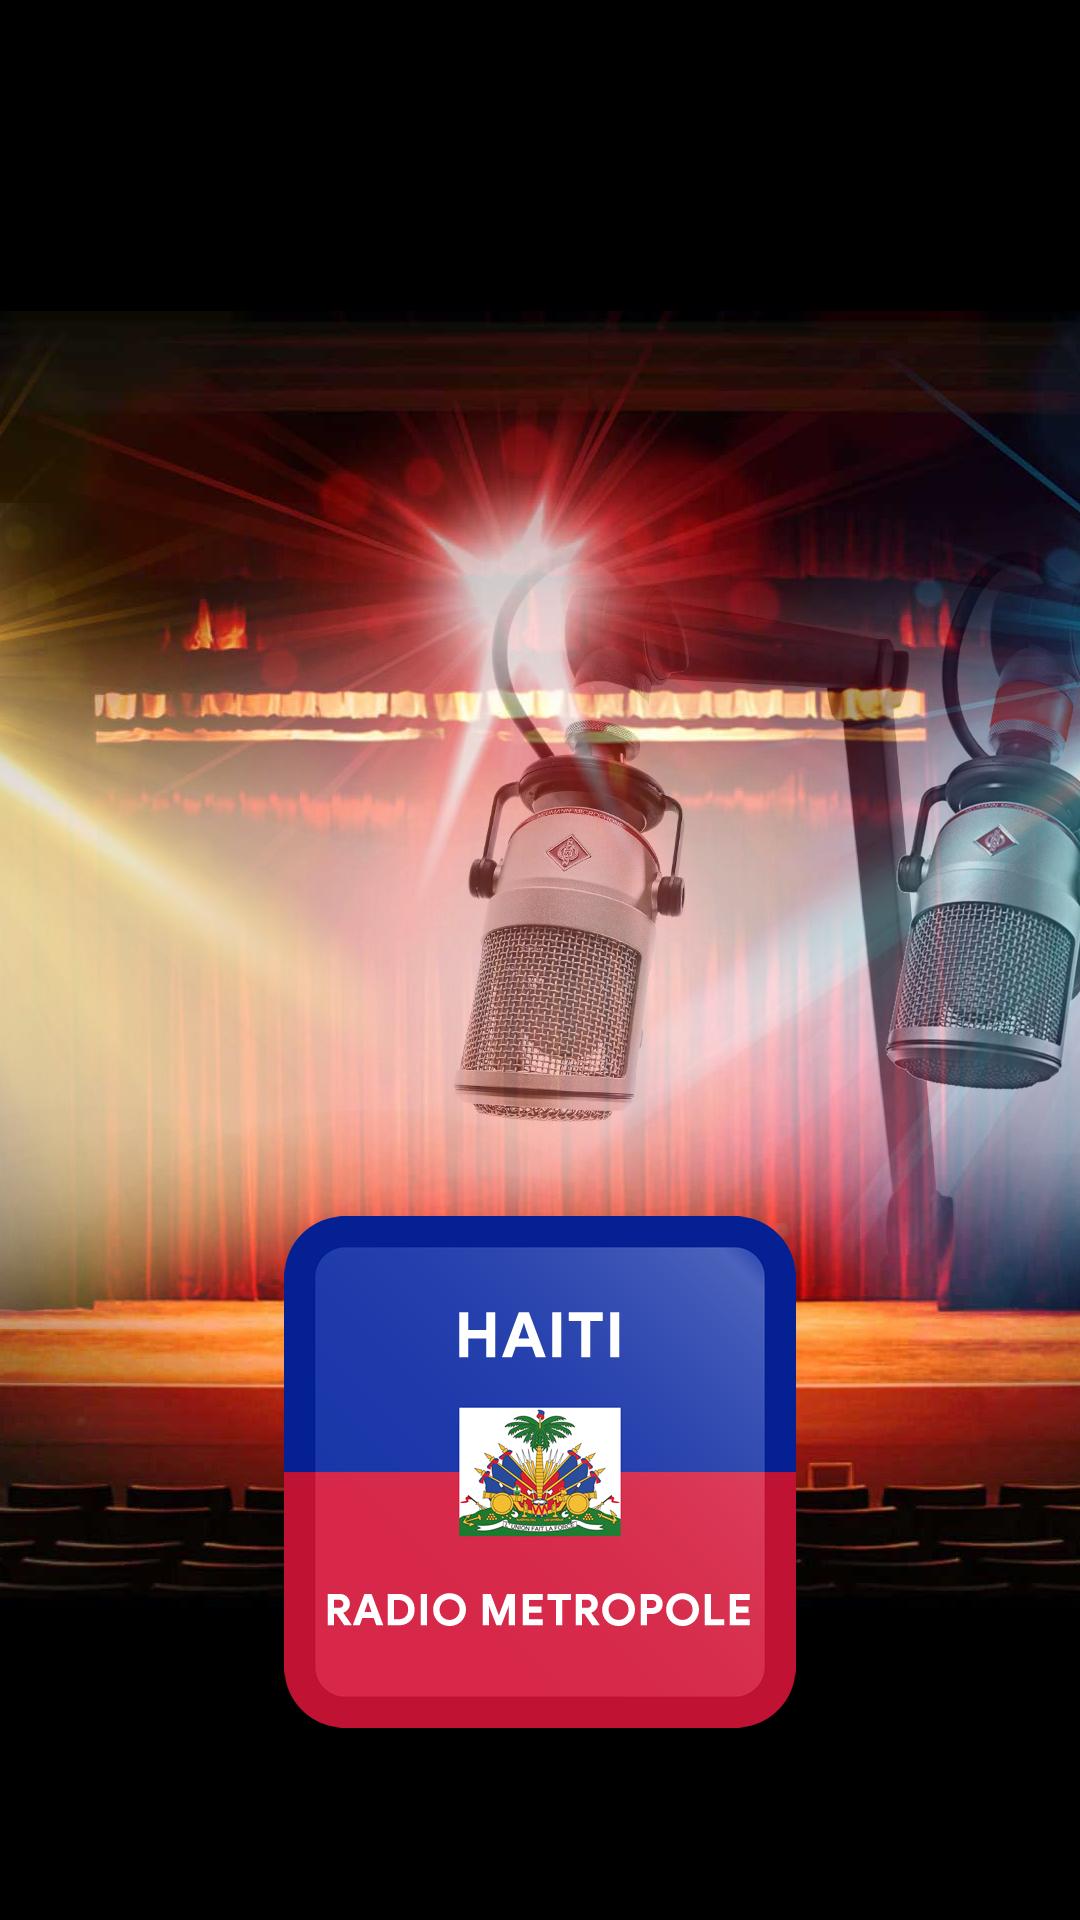 Haiti Radio Metropole Live - Haiti Radio Stations for Android - APK Download